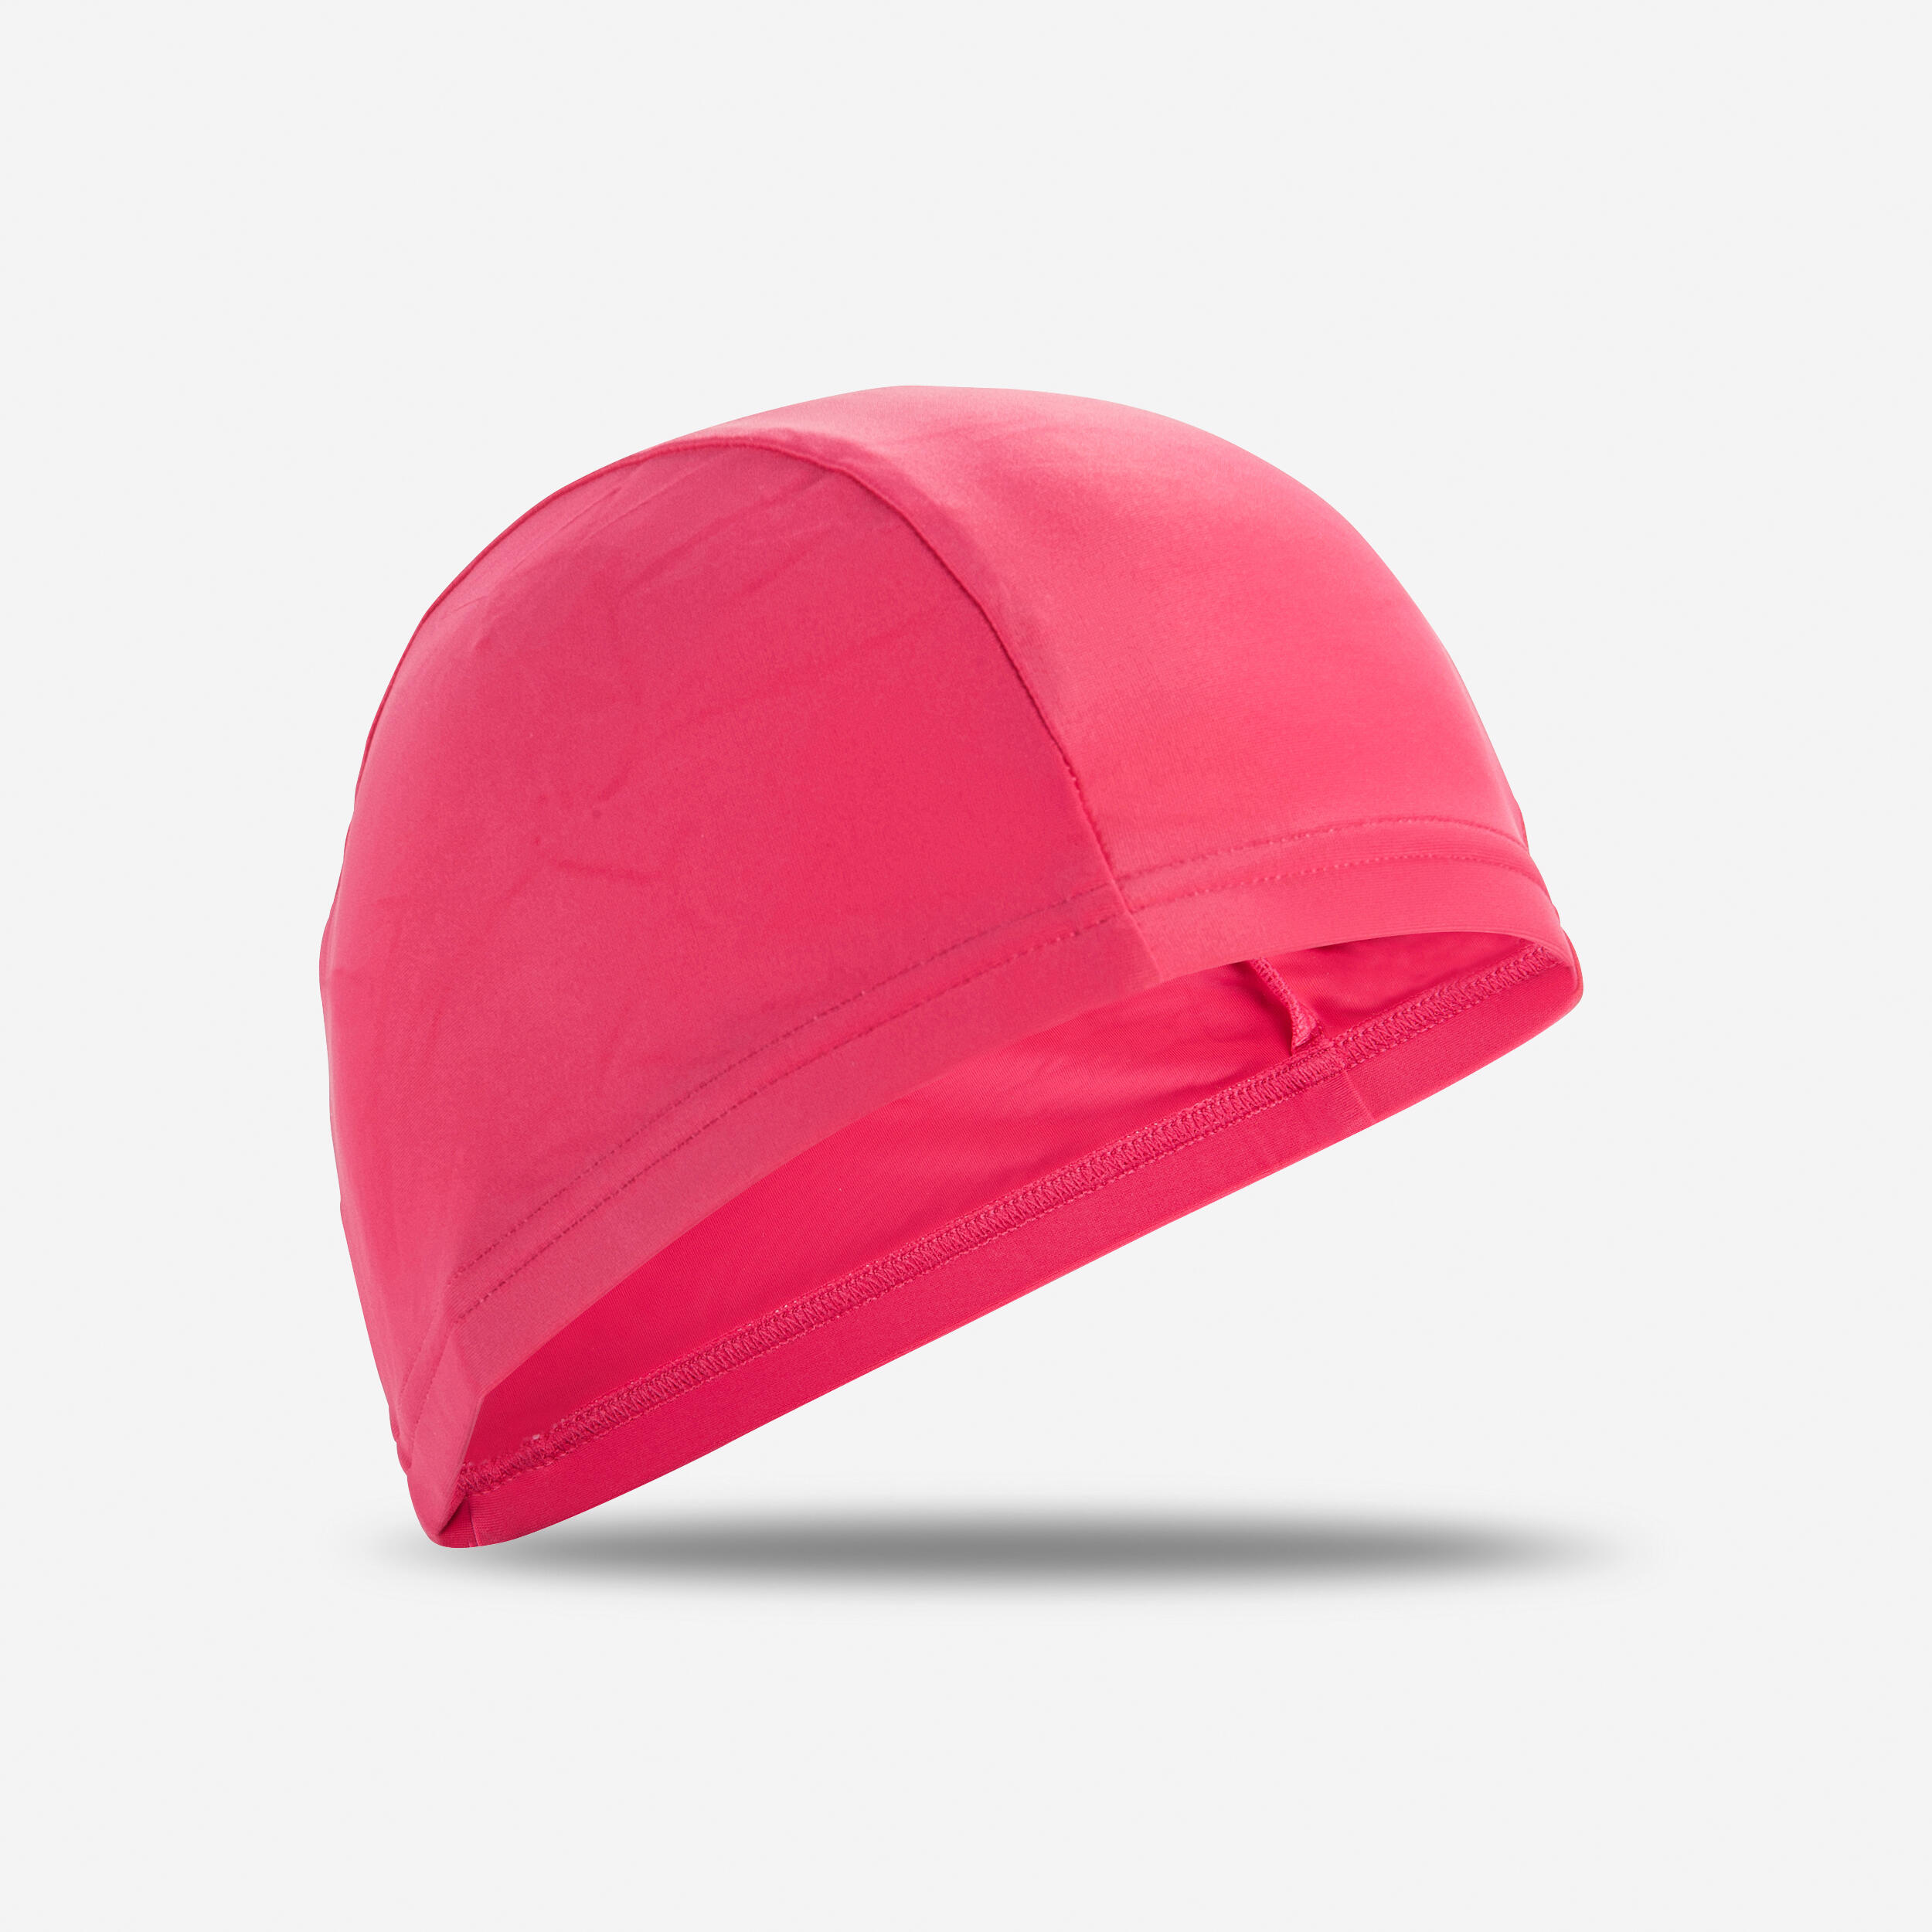 Mesh swim cap - plain fabric - pink 1/5